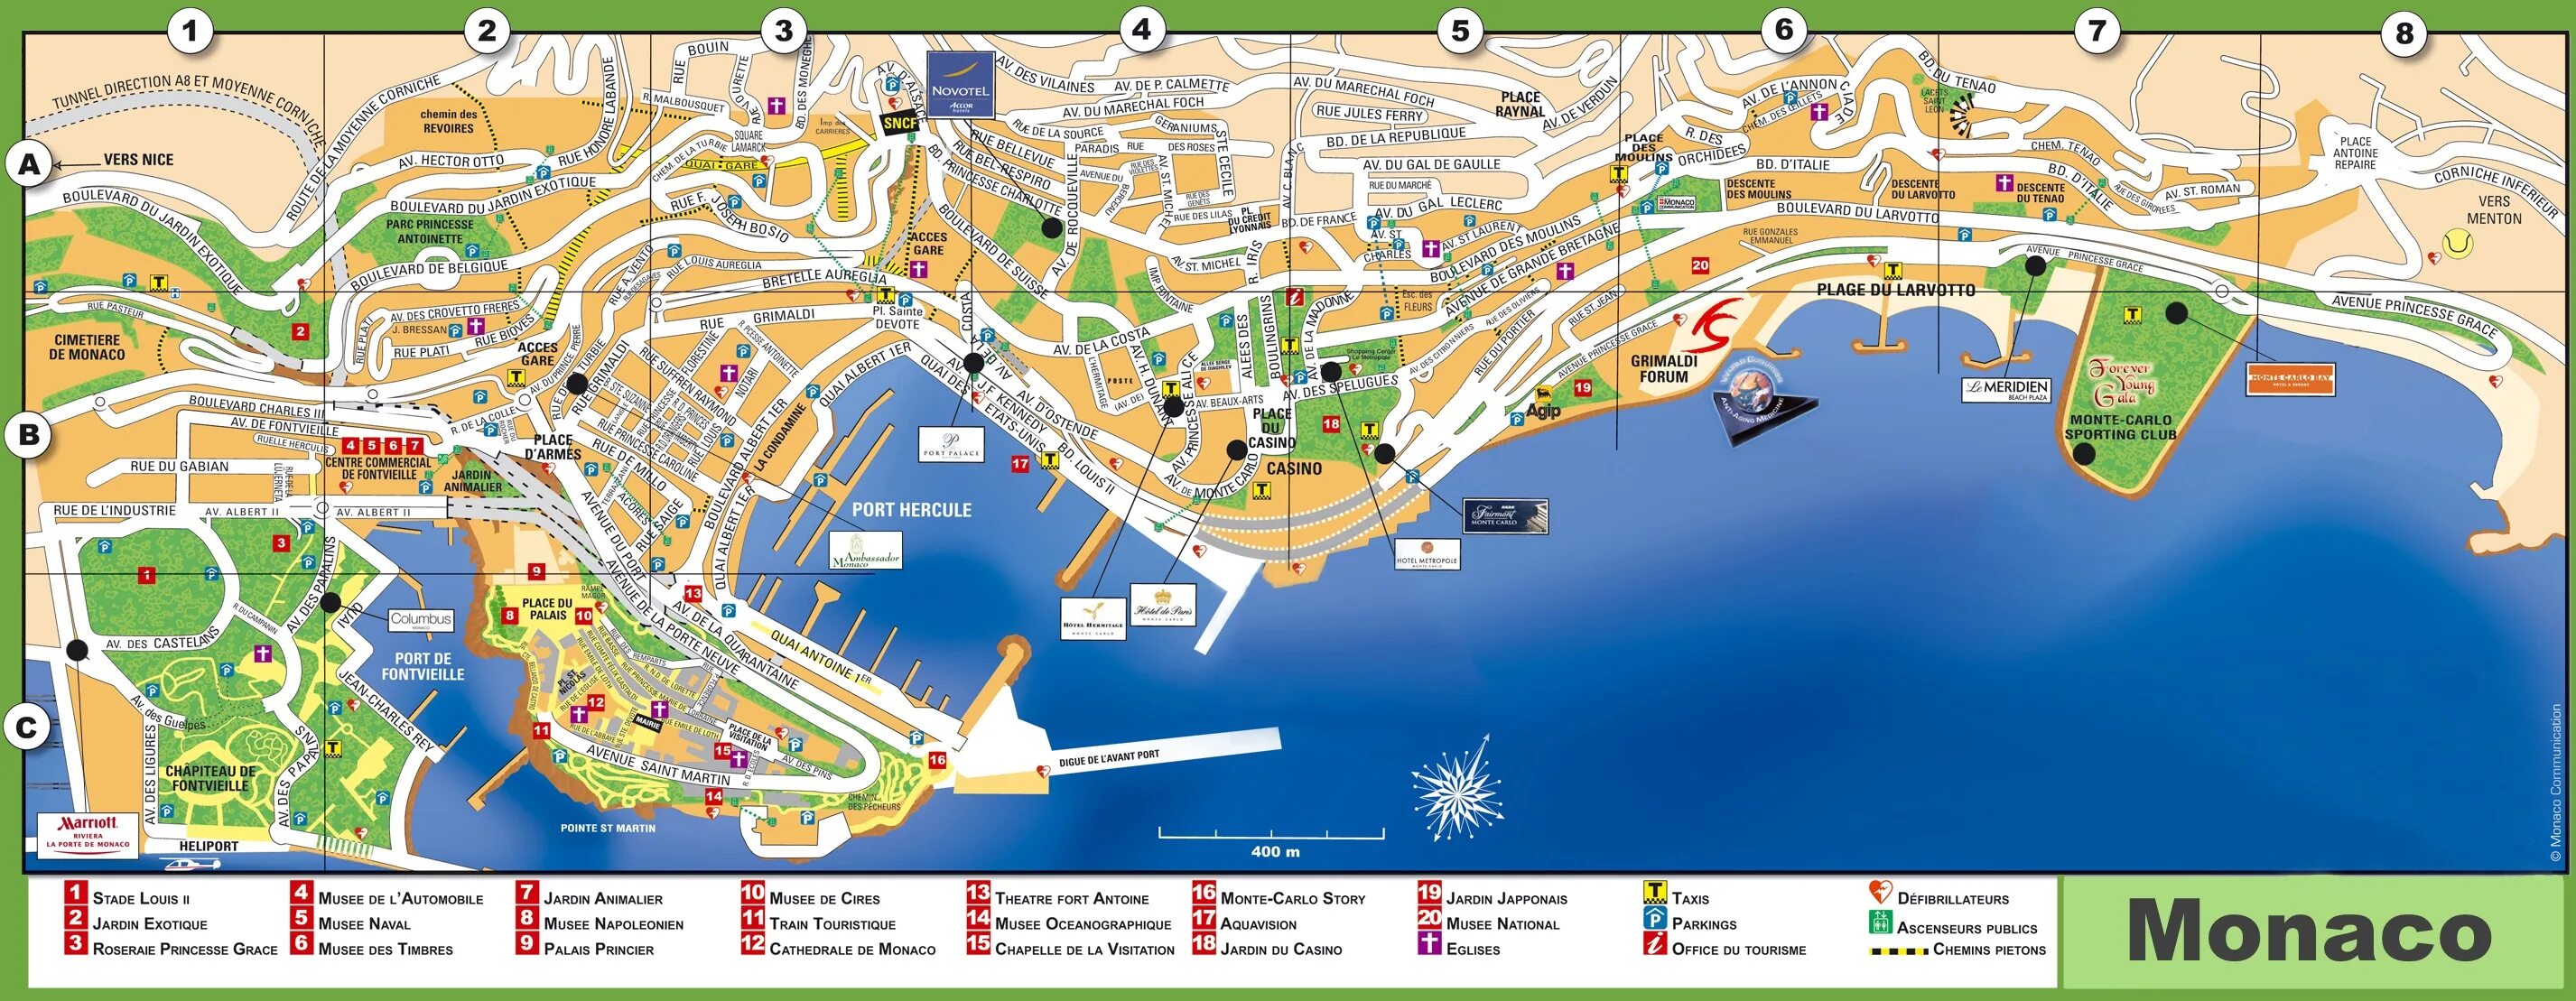 Где находится монте карло какая страна. Княжество Монако на карте. Монте Карло Монако на карте. Город Монако на карте. Монако туристическая карта.